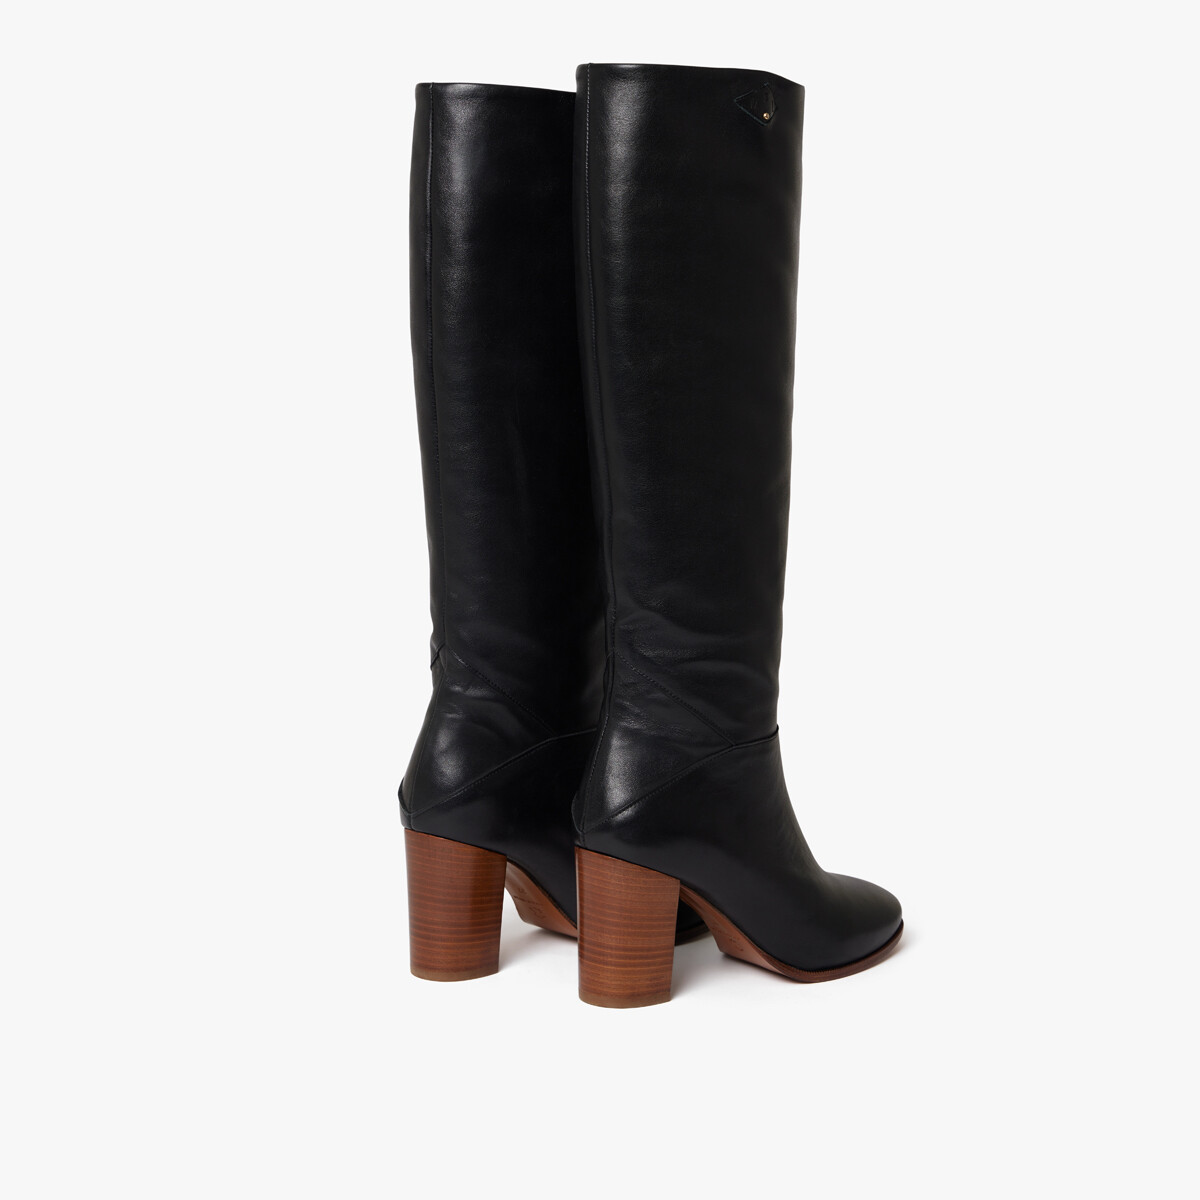 Angelina boots, Black - leather - image 2